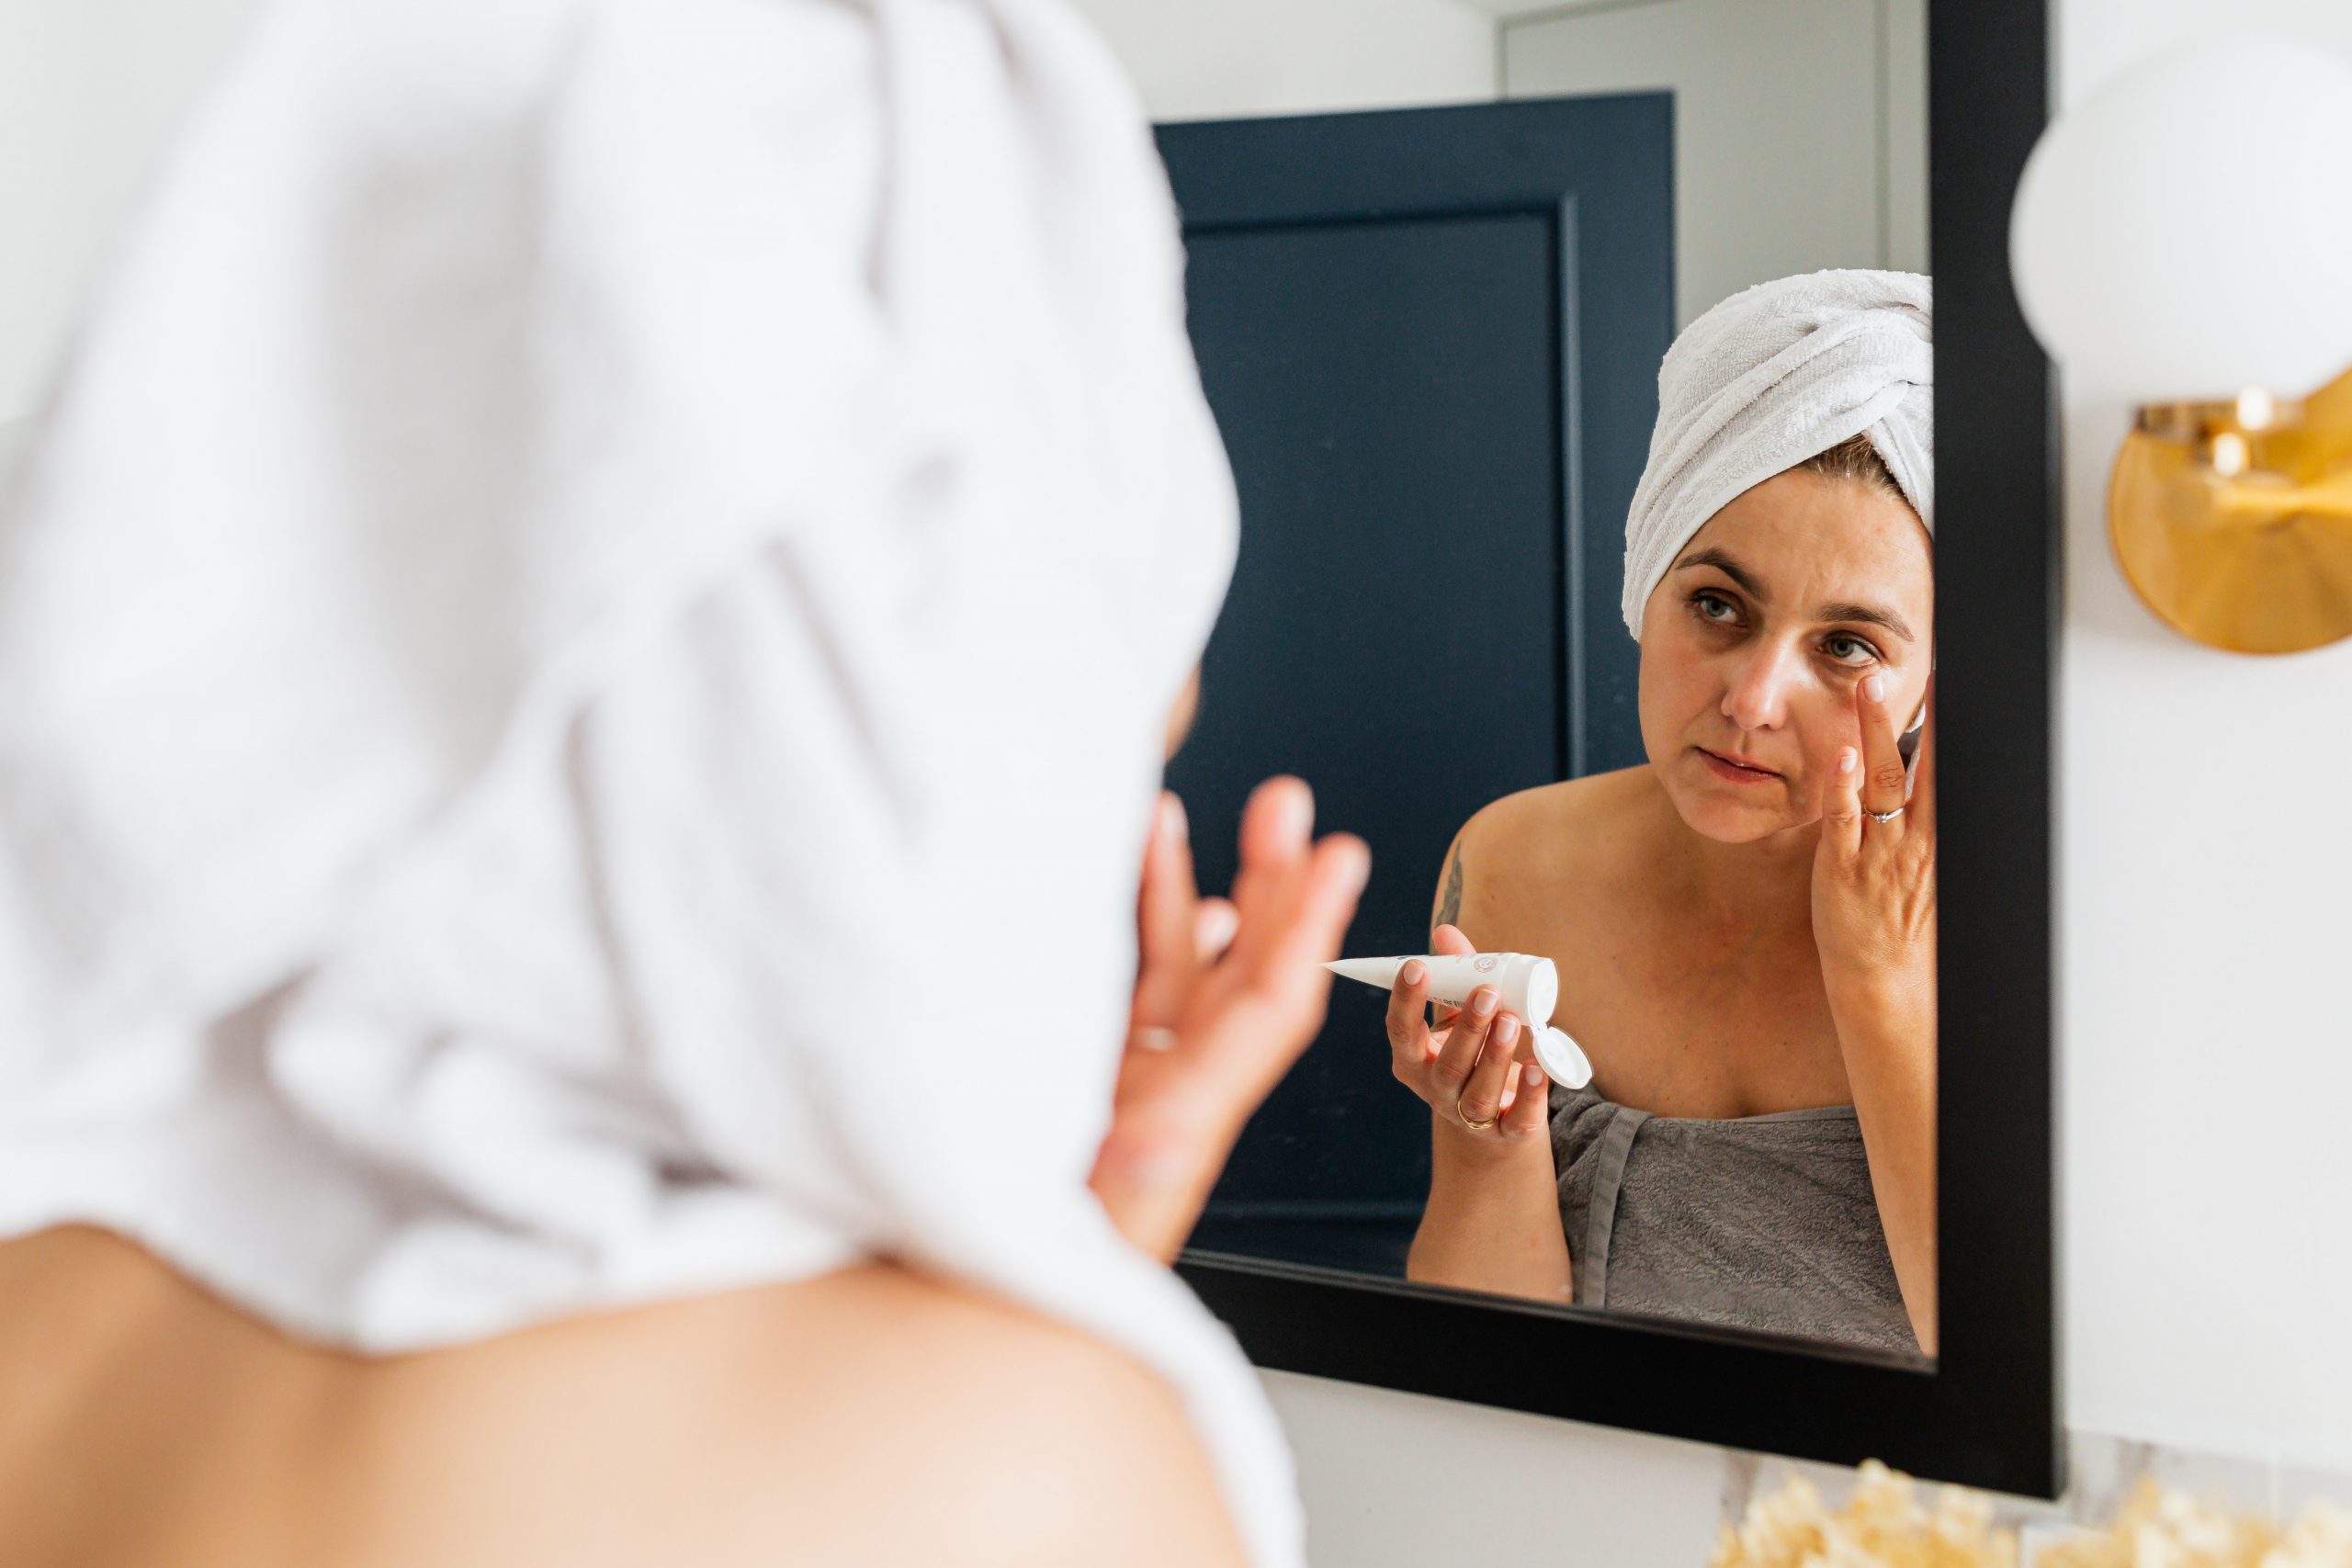 A woman applies makeup to her face